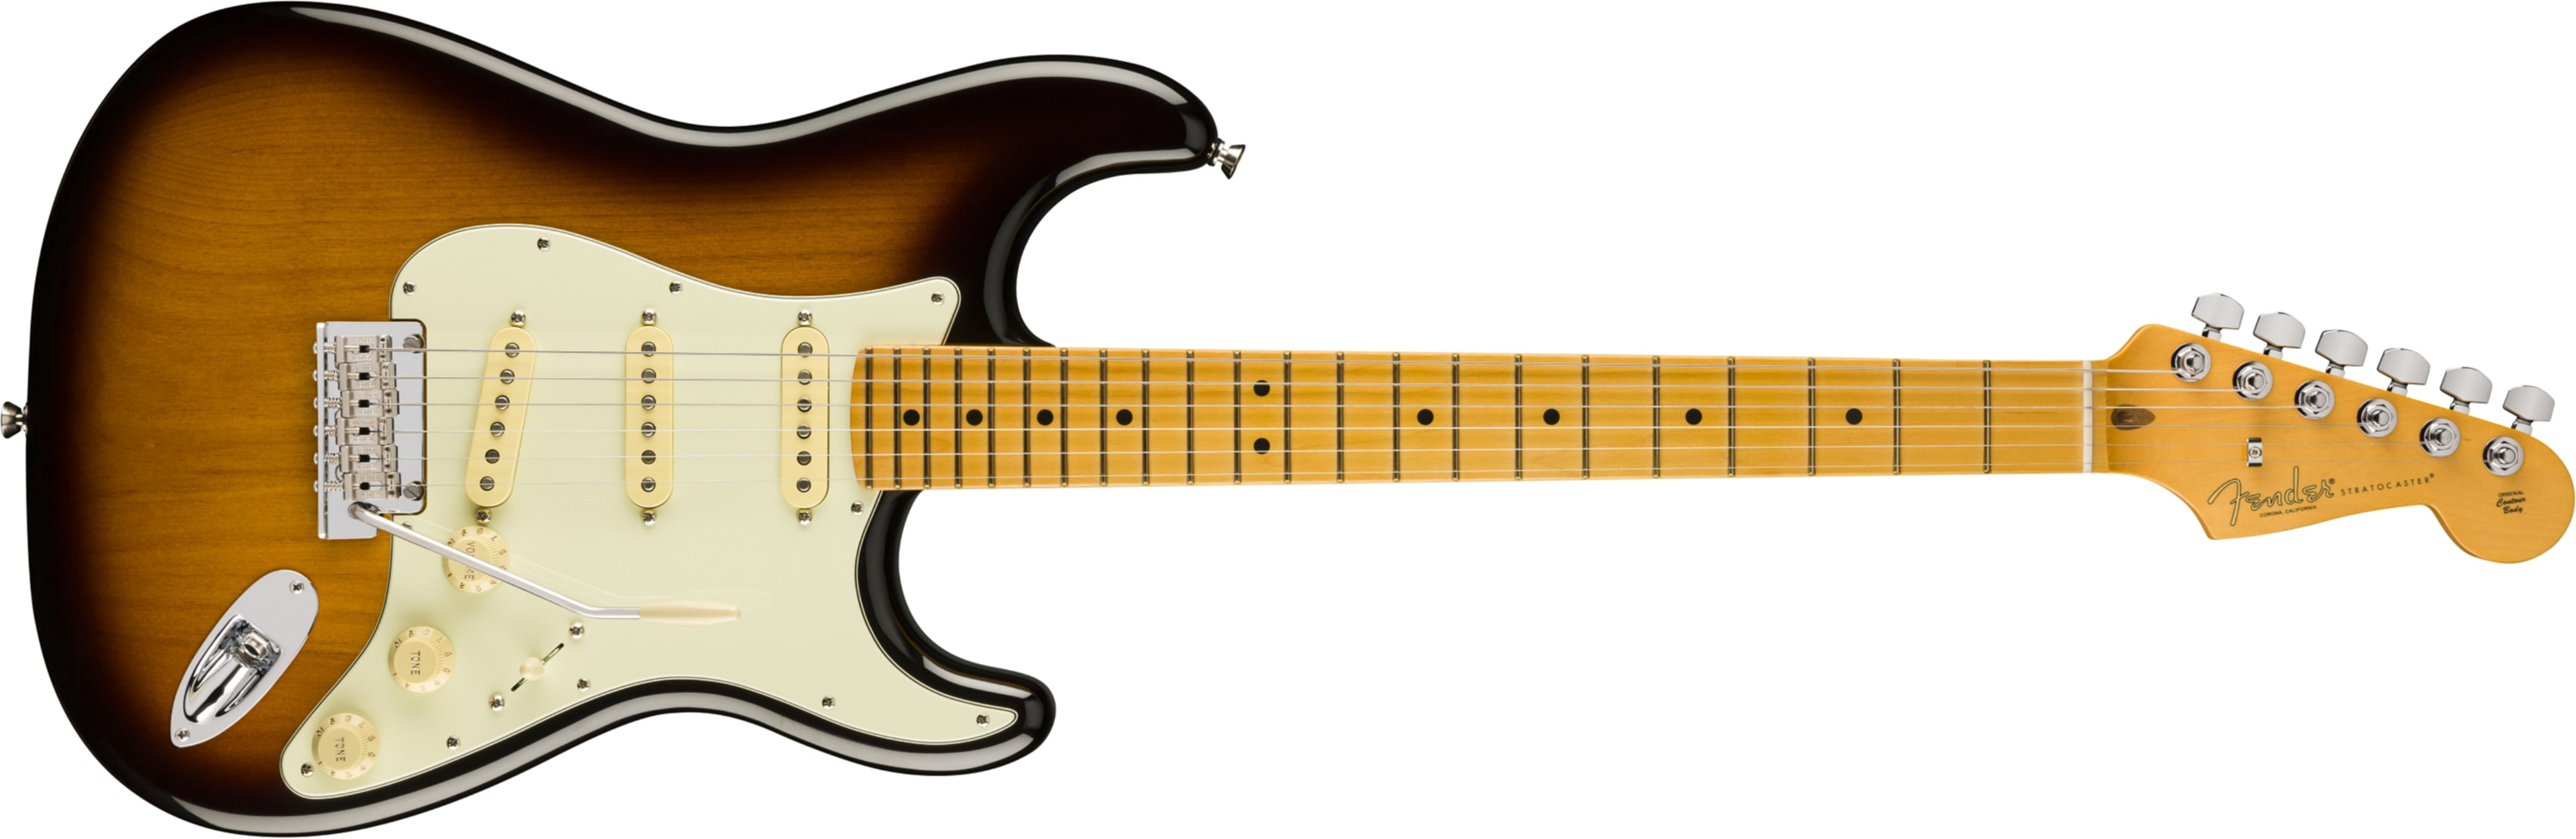 Fender Stratocaster American Pro Ii 70th Anniversary 3s Trem Mn - 2-color Sunburst - Guitare Électrique Forme Str - Main picture